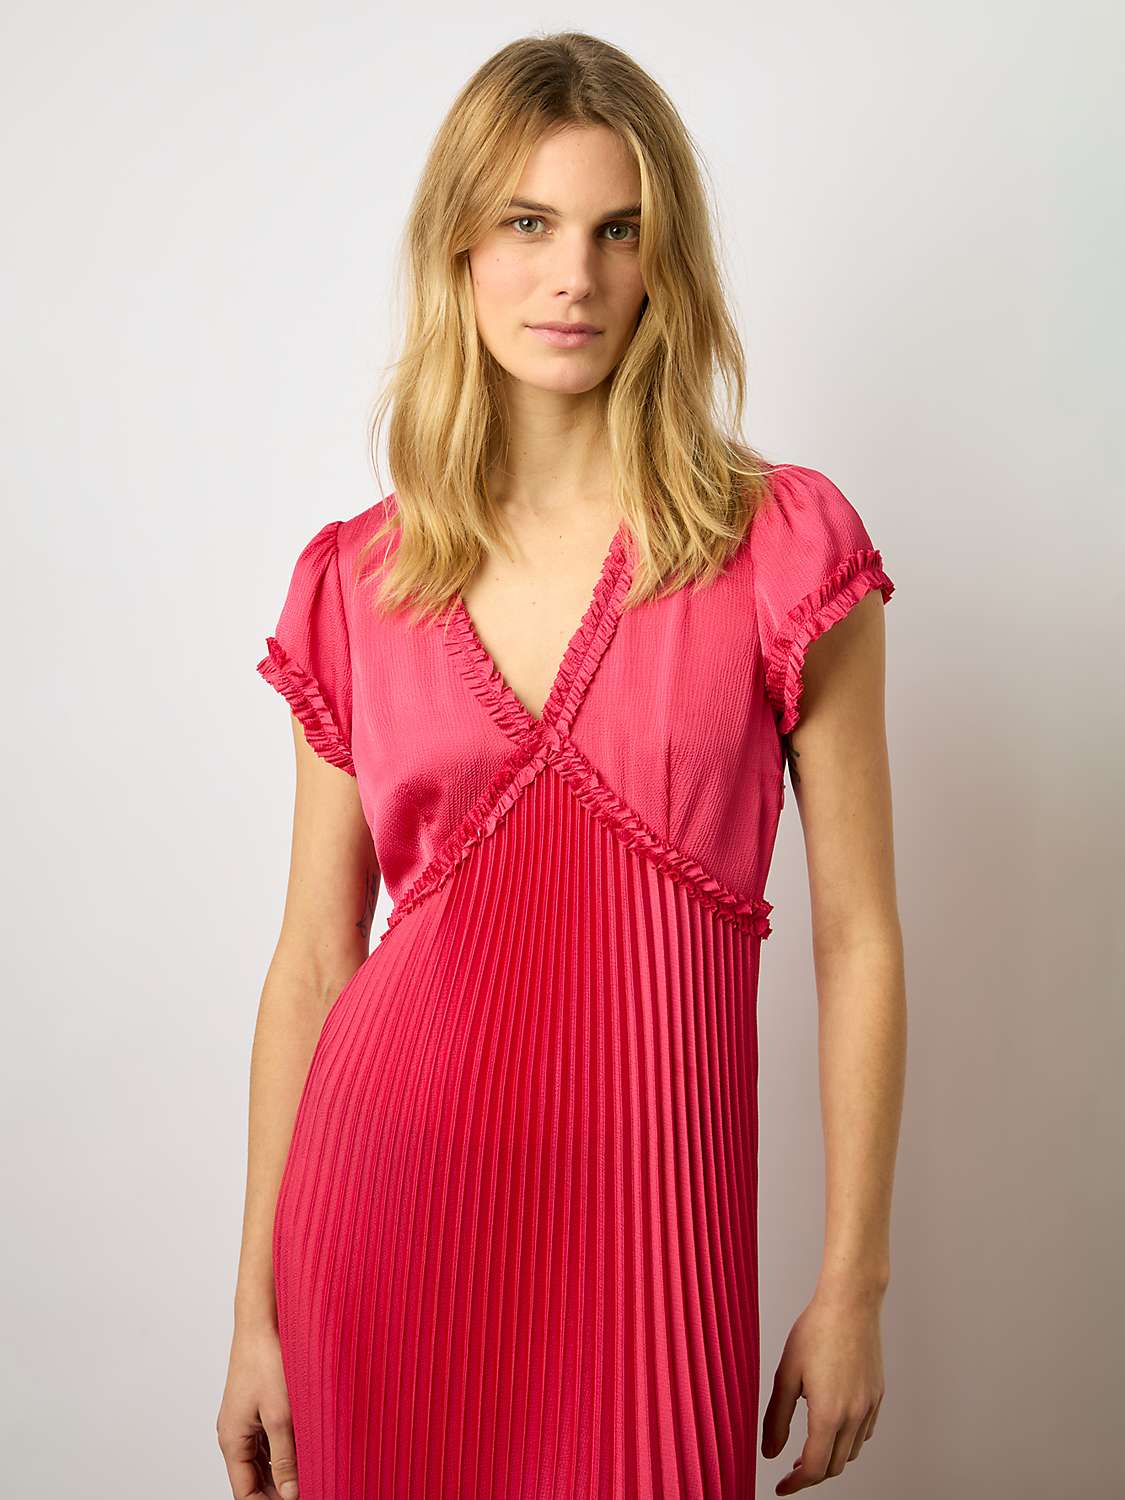 Buy Gerard Darel Elvy Plisse Empire Line Maxi Dress, Pink Online at johnlewis.com